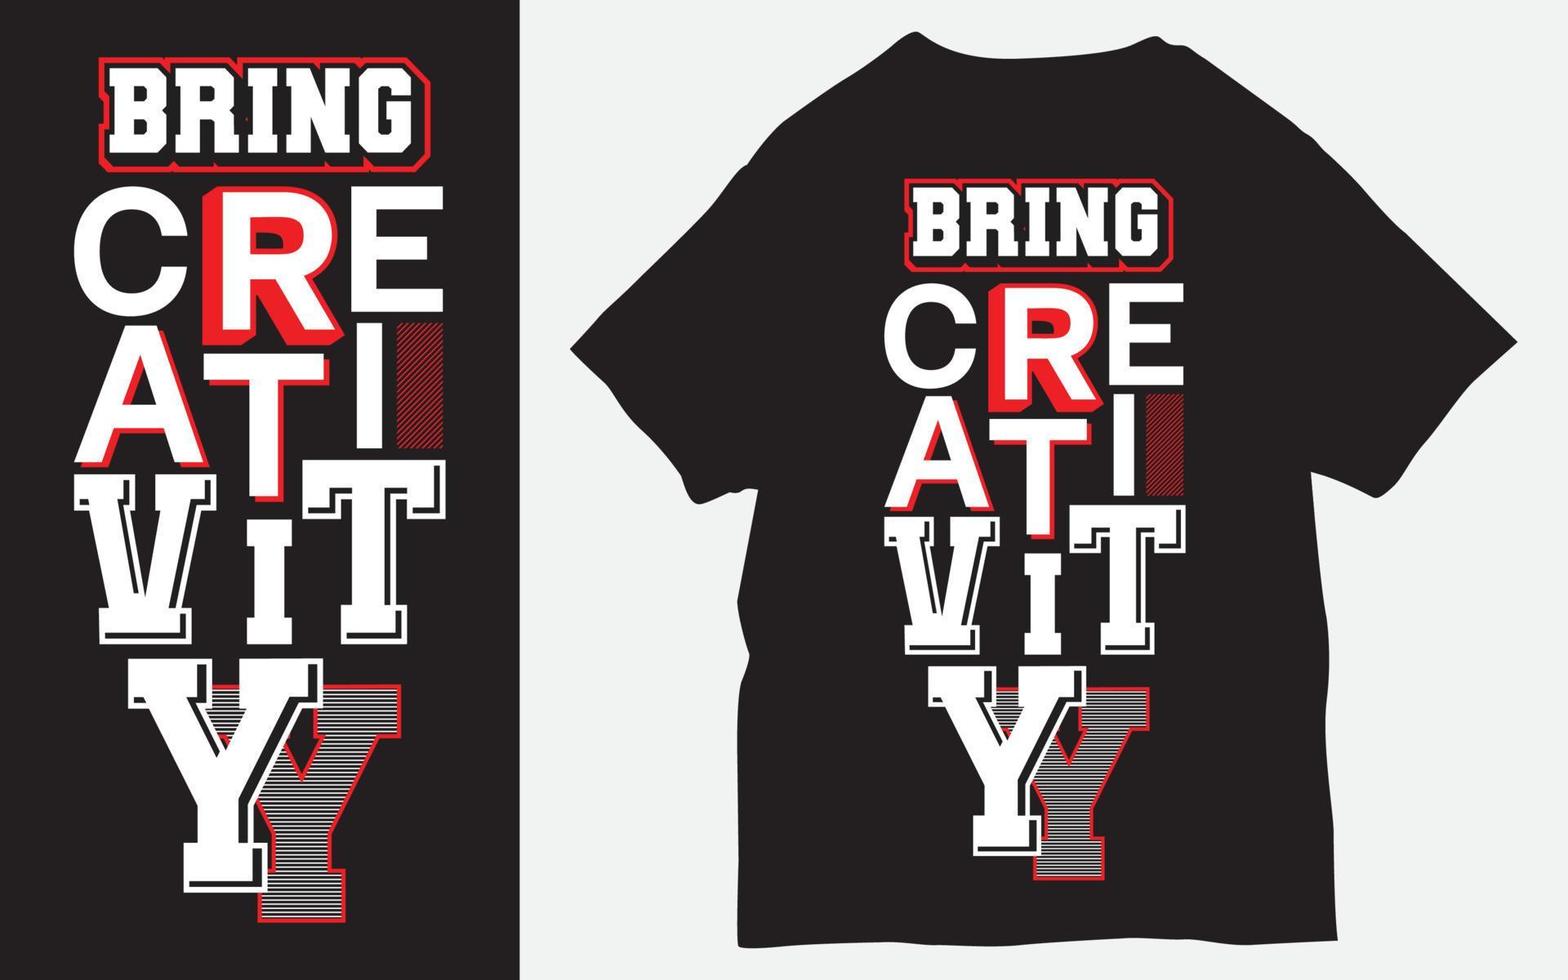 Bring creativity short slogan for t shirt print vector